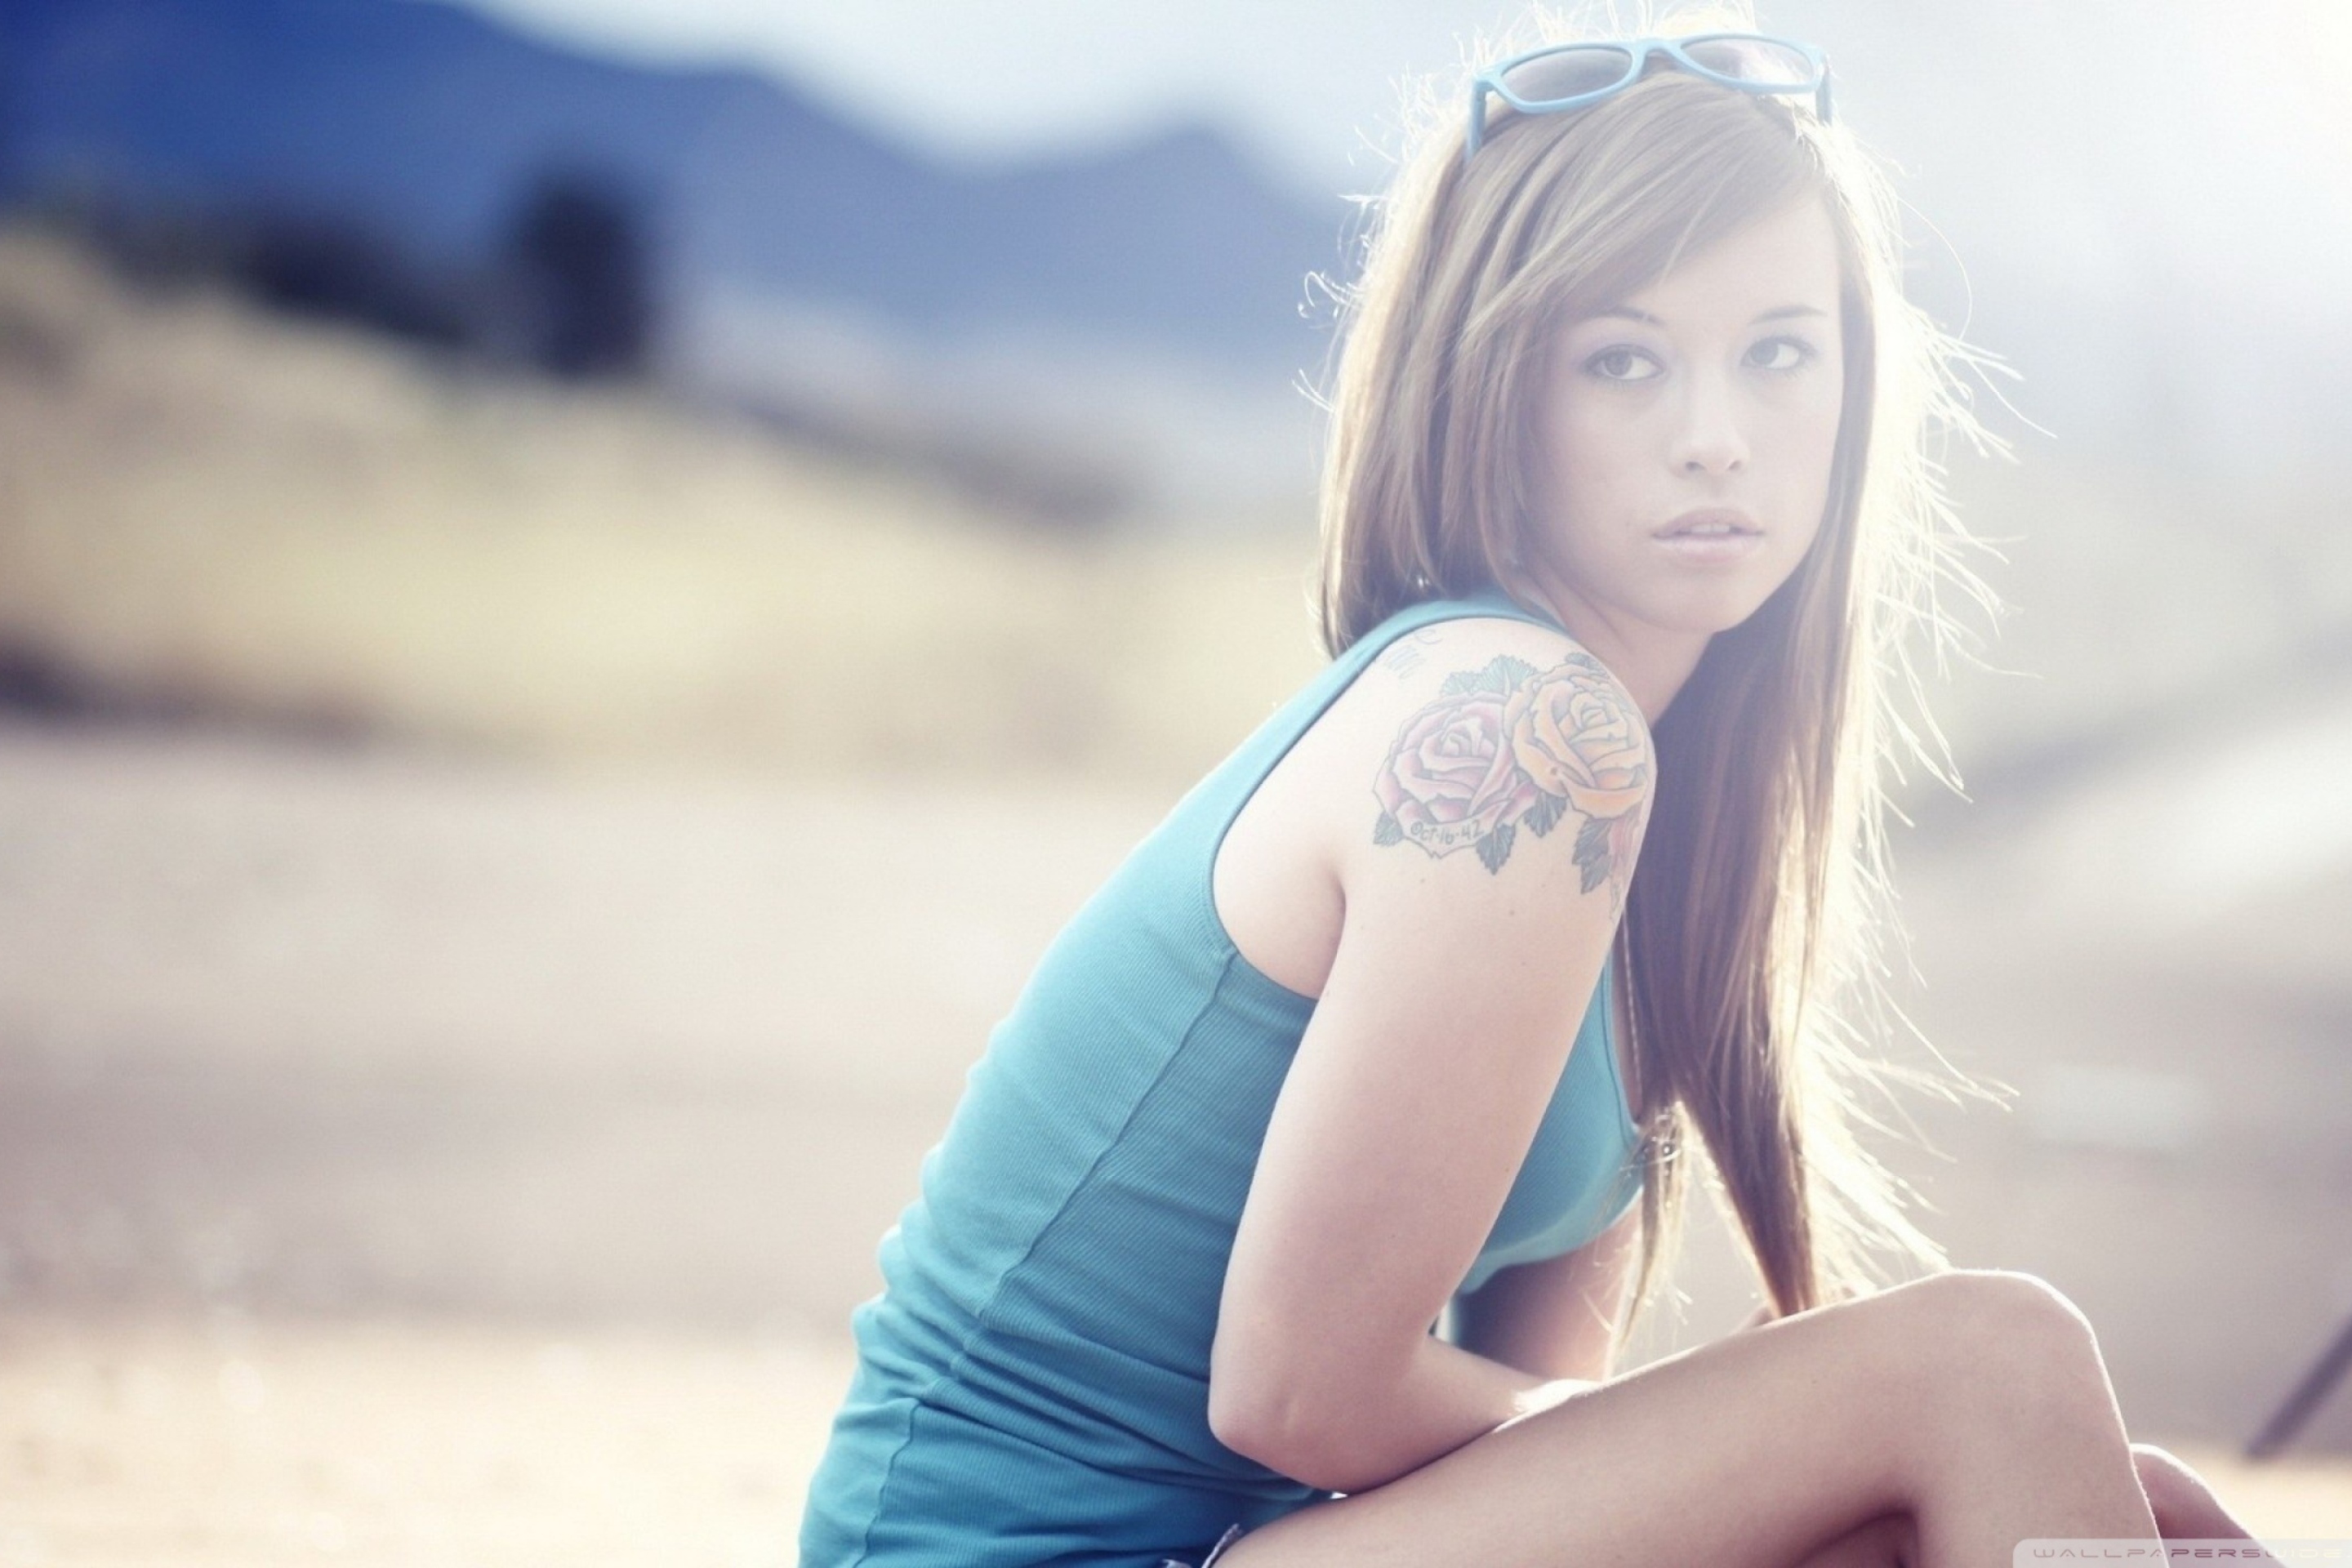 Sfondi Beautiful Girl With Long Blonde Hair And Rose Tattoo 2880x1920